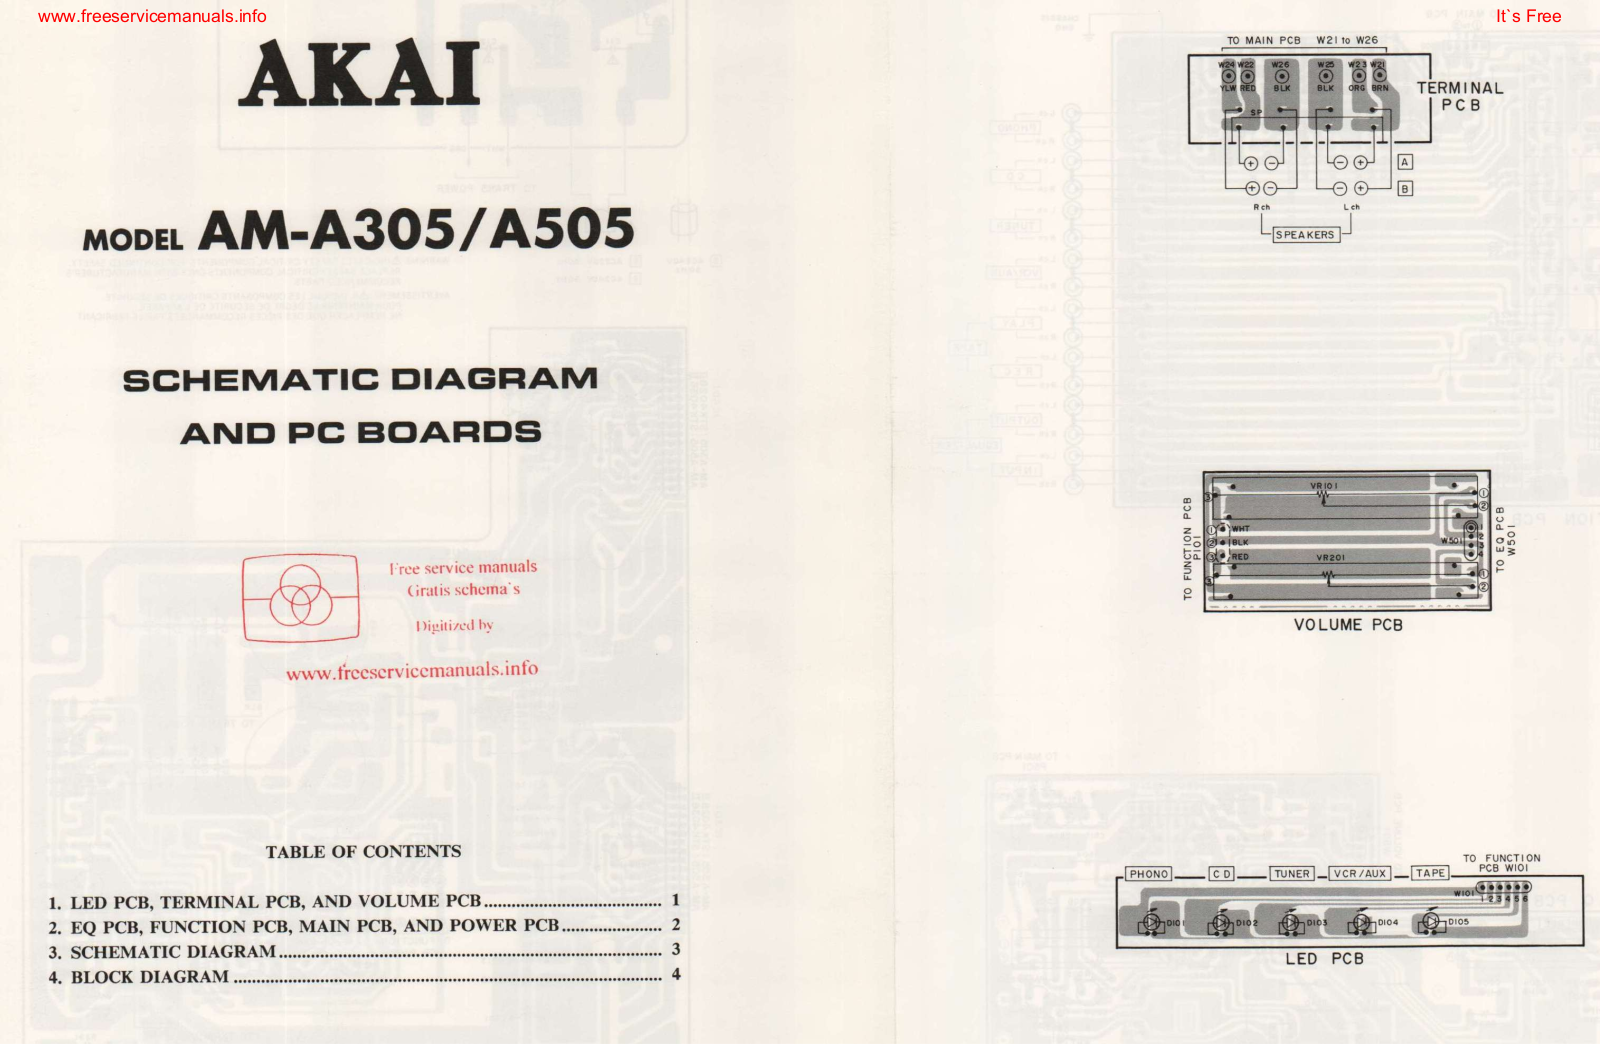 Akai AM-A305 Schematic